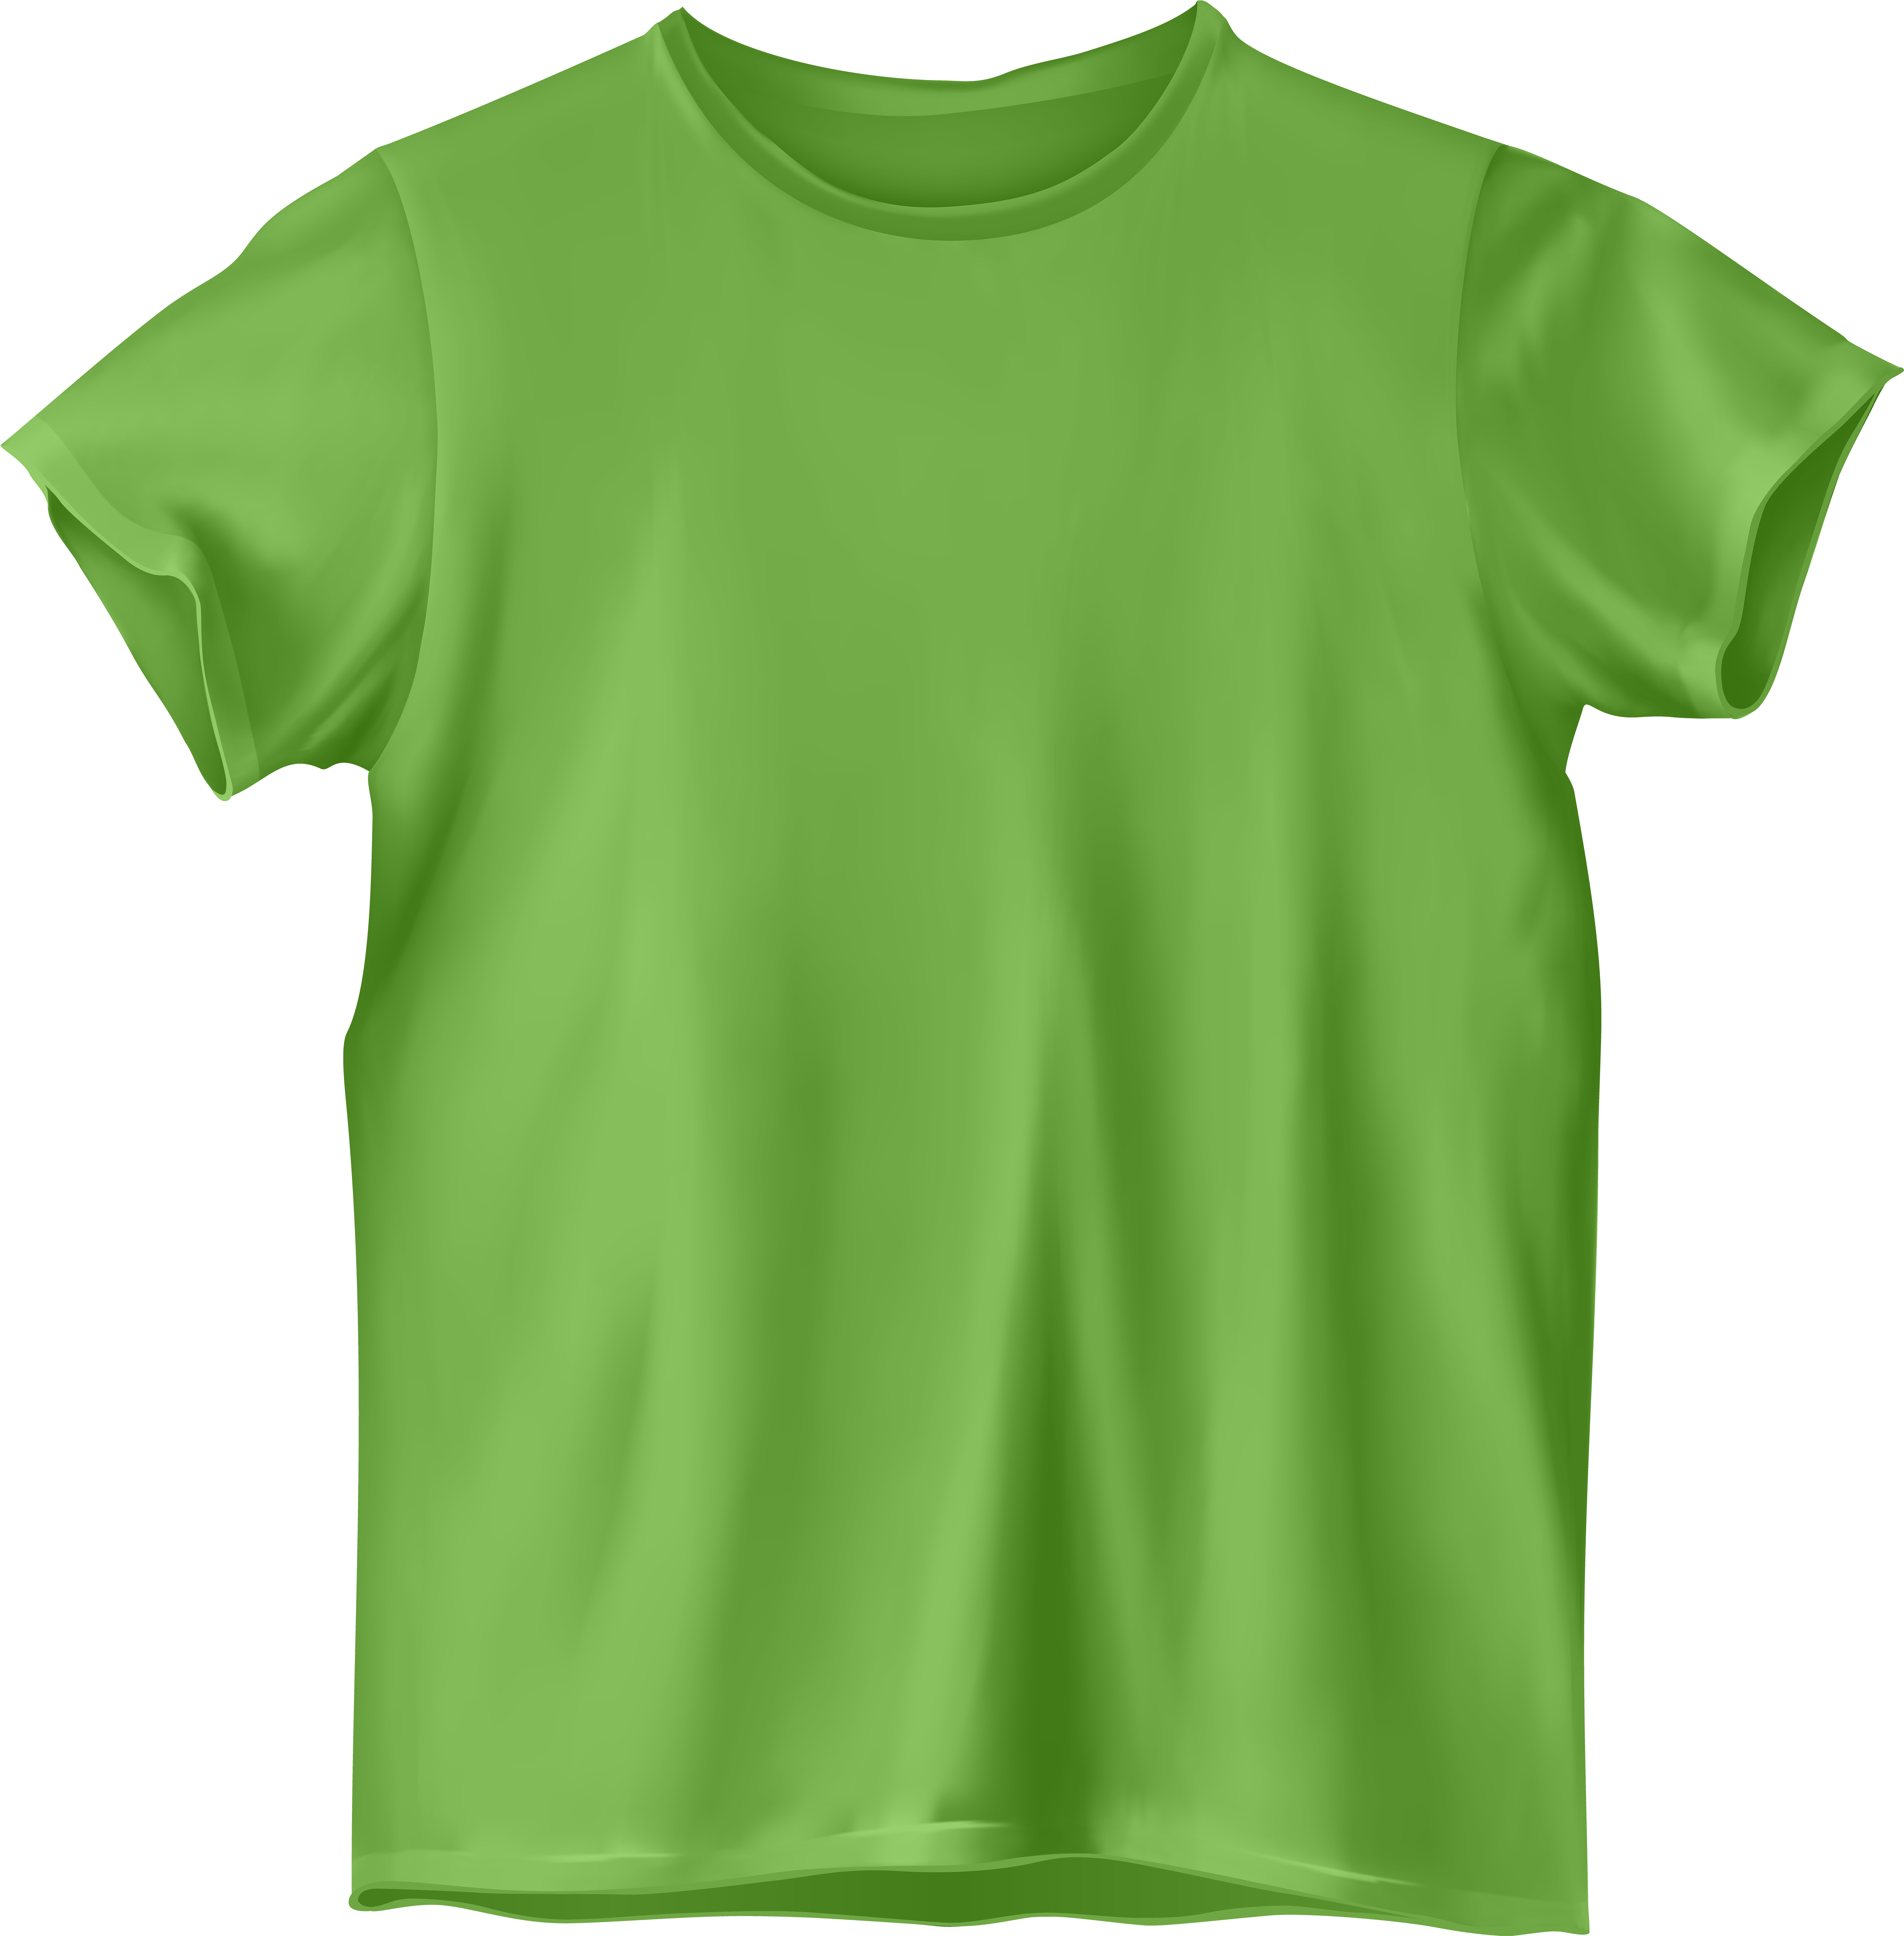 A Green Shirt On A Black Background